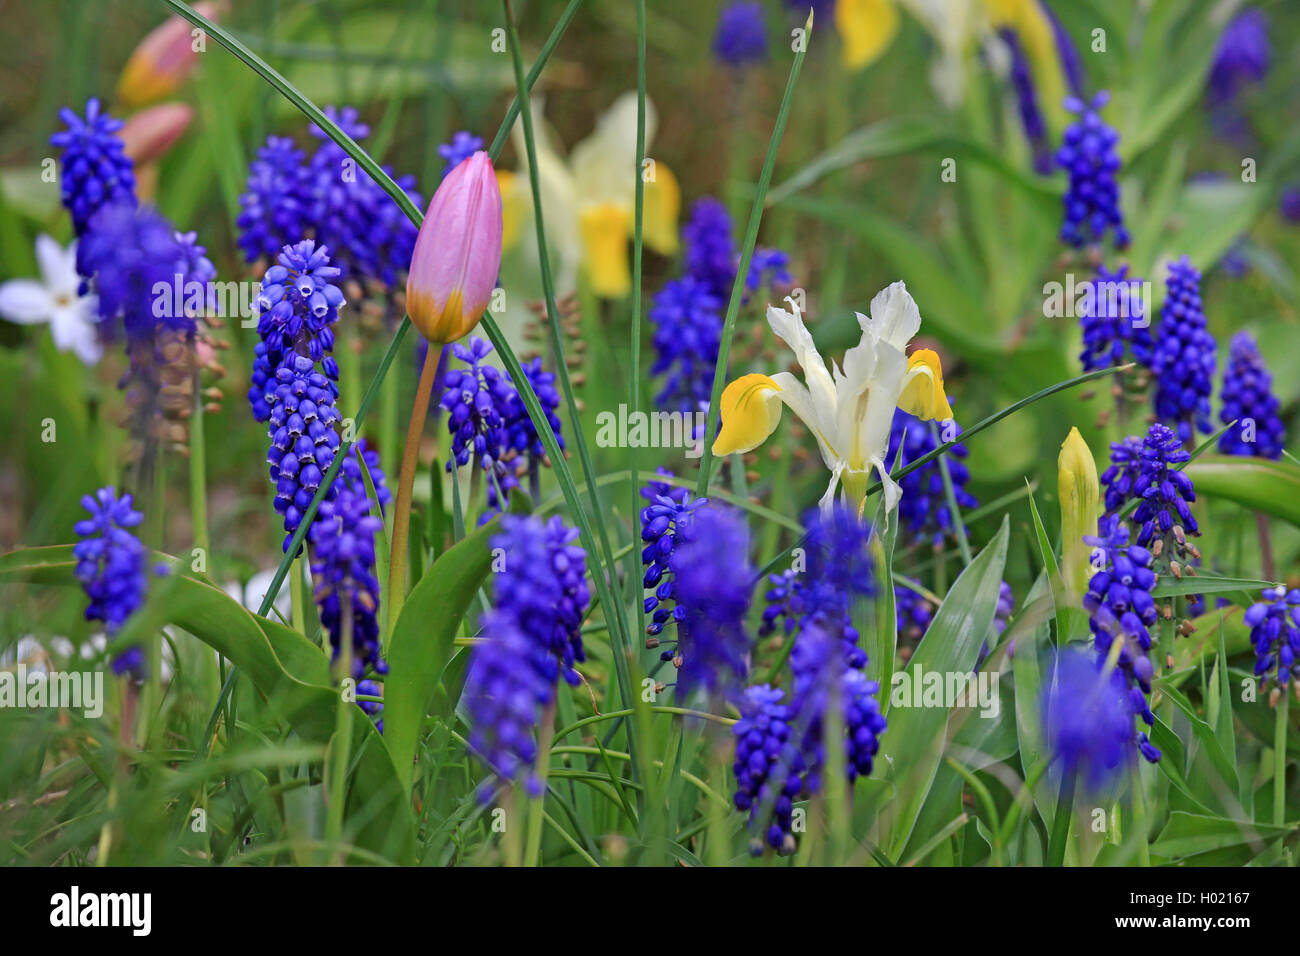 Foglie di mais Iris, cornuto (iris Iris bucharica), che fiorisce con uva e giacinto tulip Foto Stock